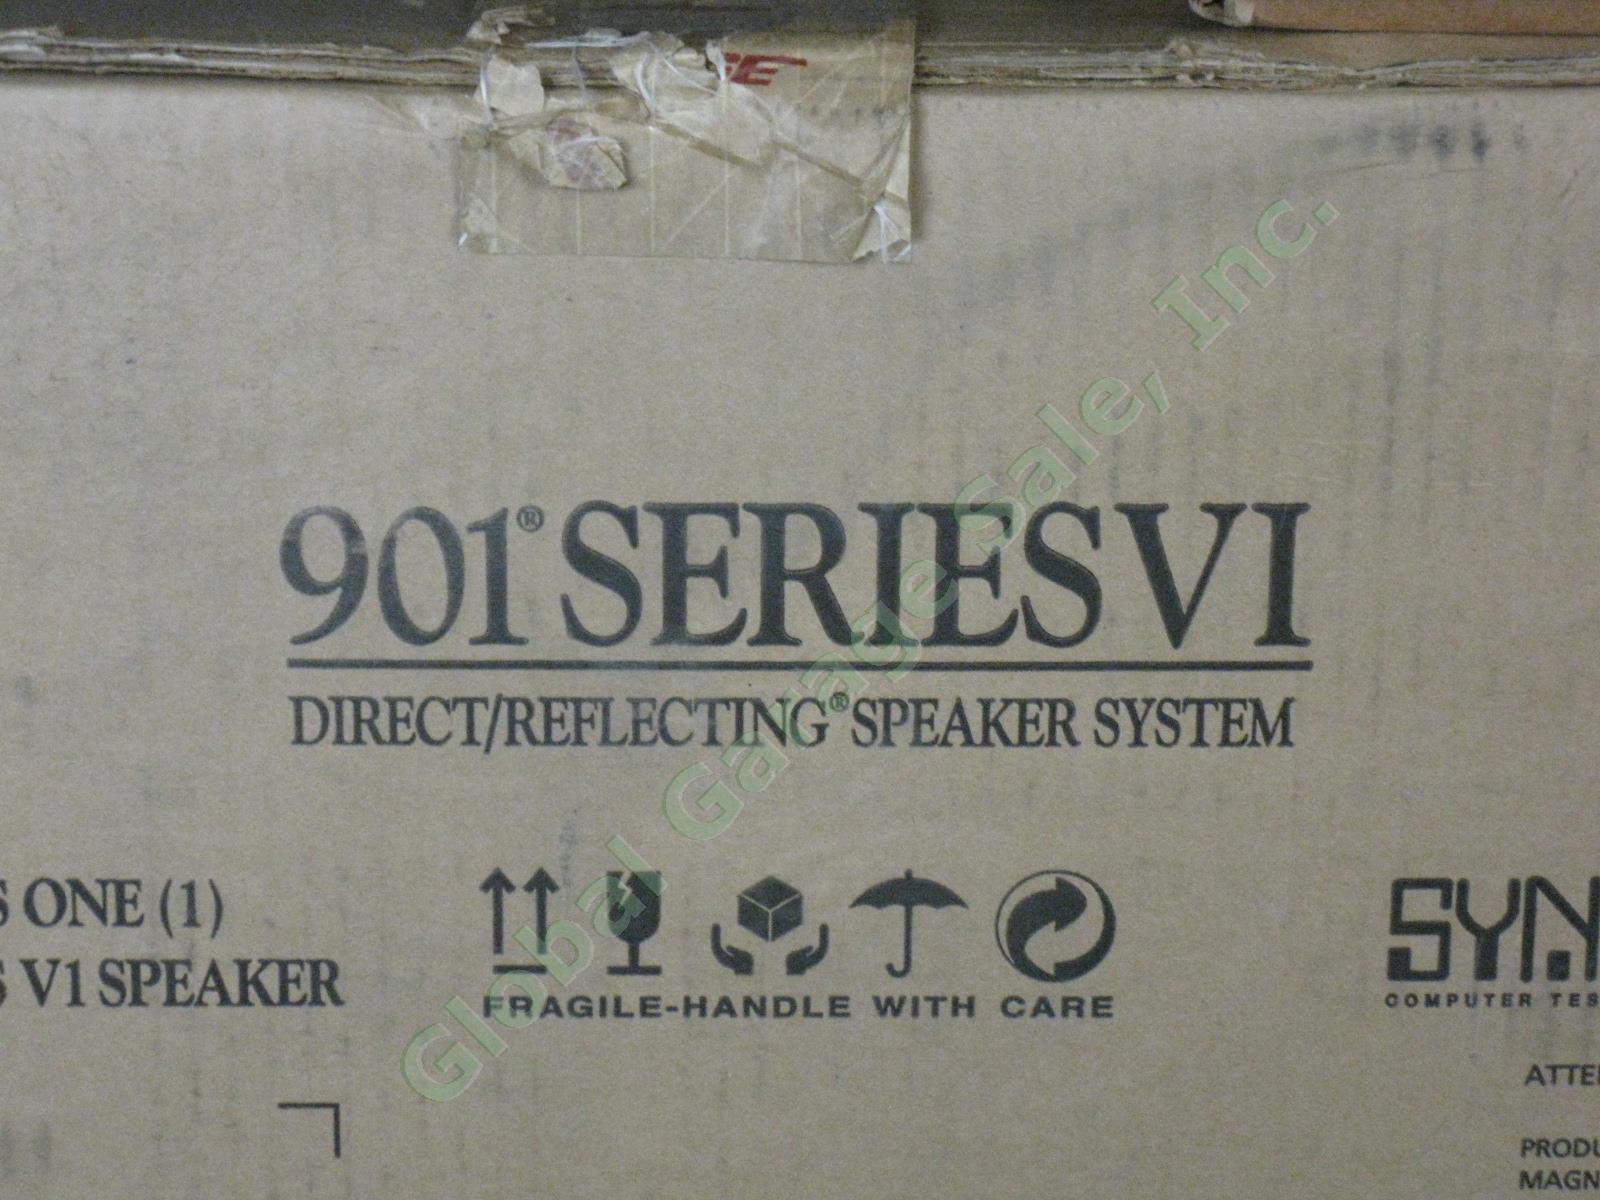 NIB! NEW! Sealed! Bose 901 Series VI Stereo Speakers + Equalizer Walnut Brown 1